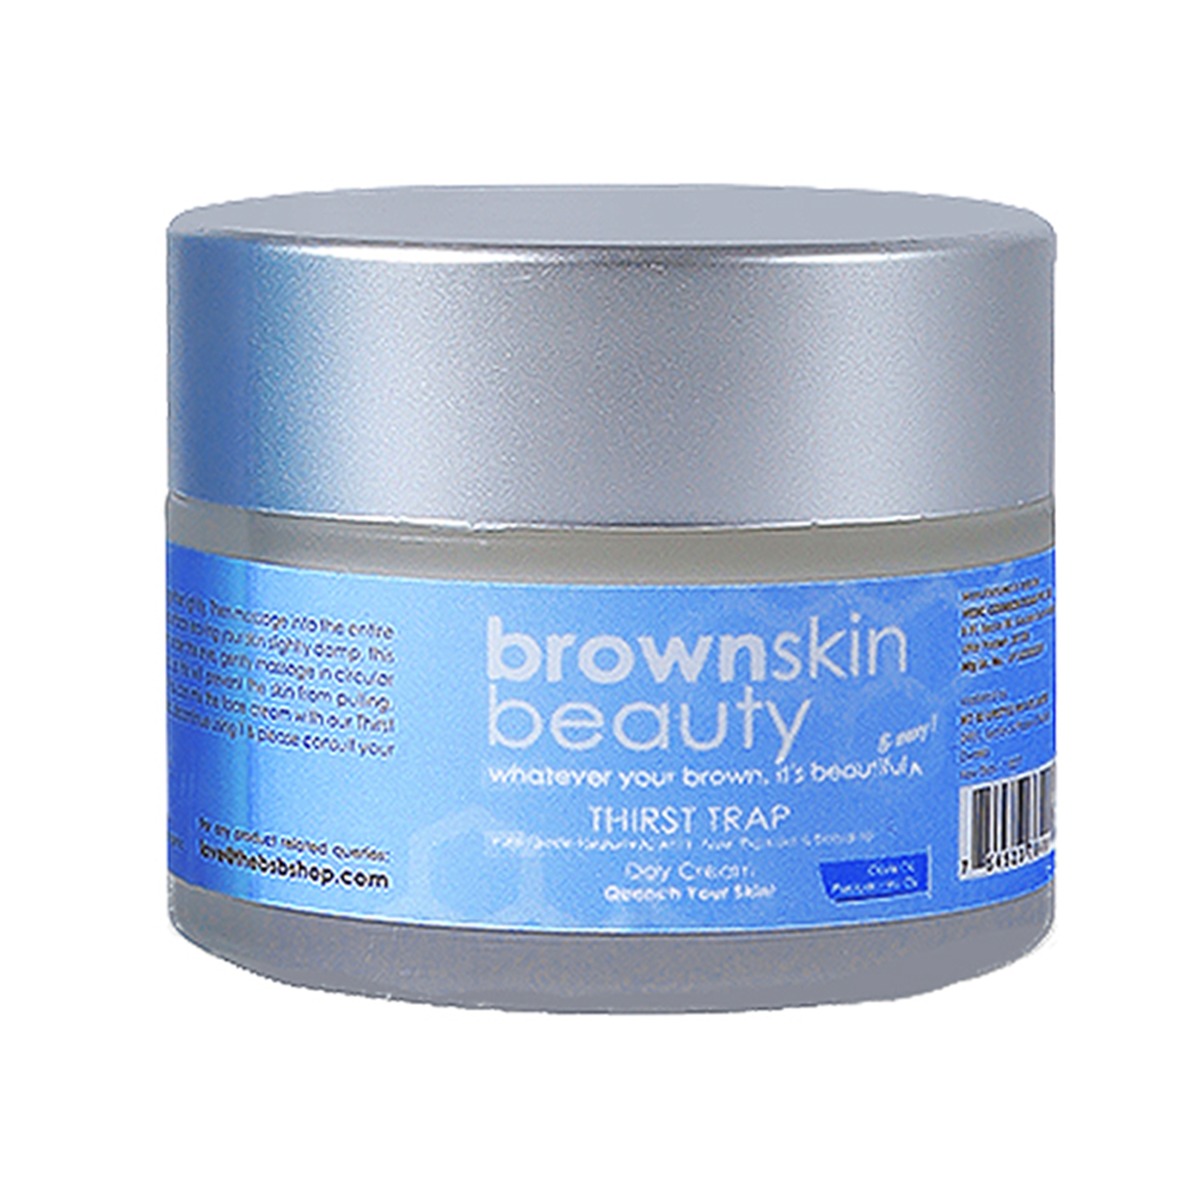 BrownSkin Beauty Thirst Trap Day Cream, 50ml